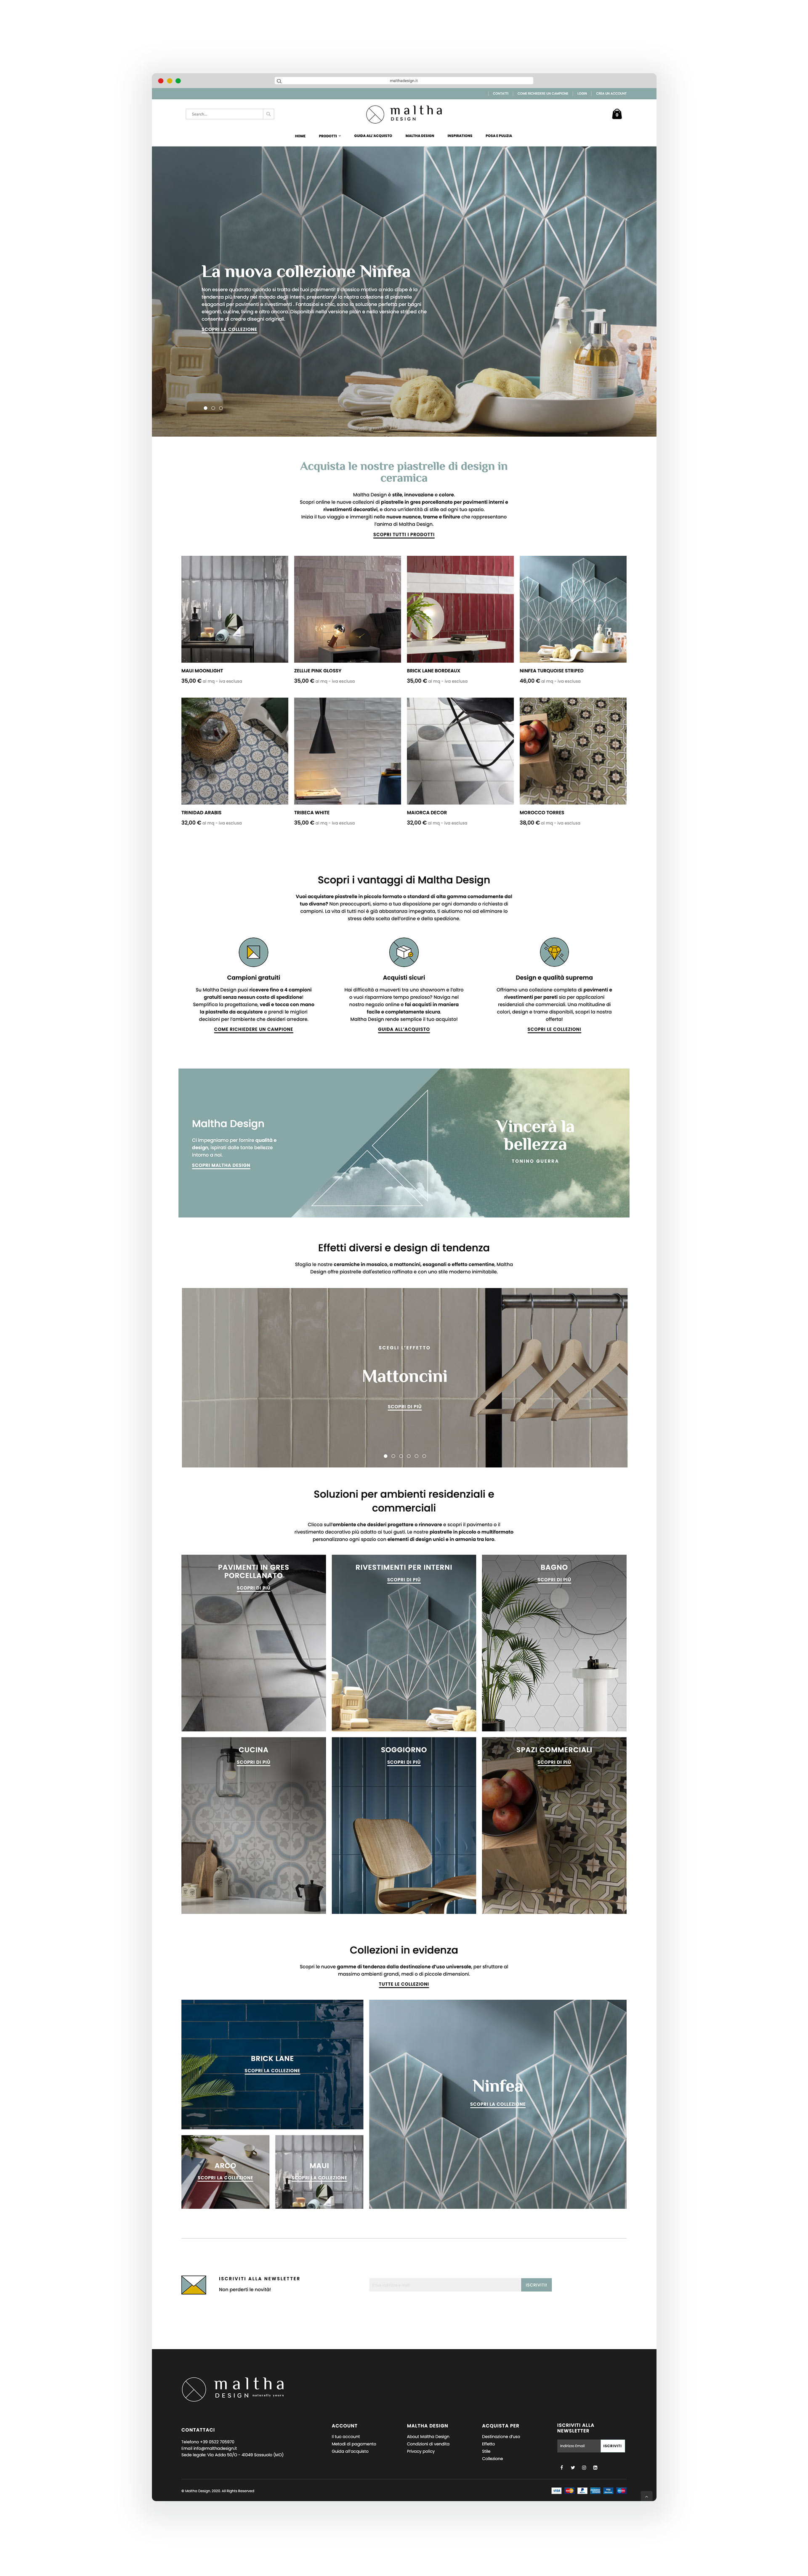 Maltha Design Homepage